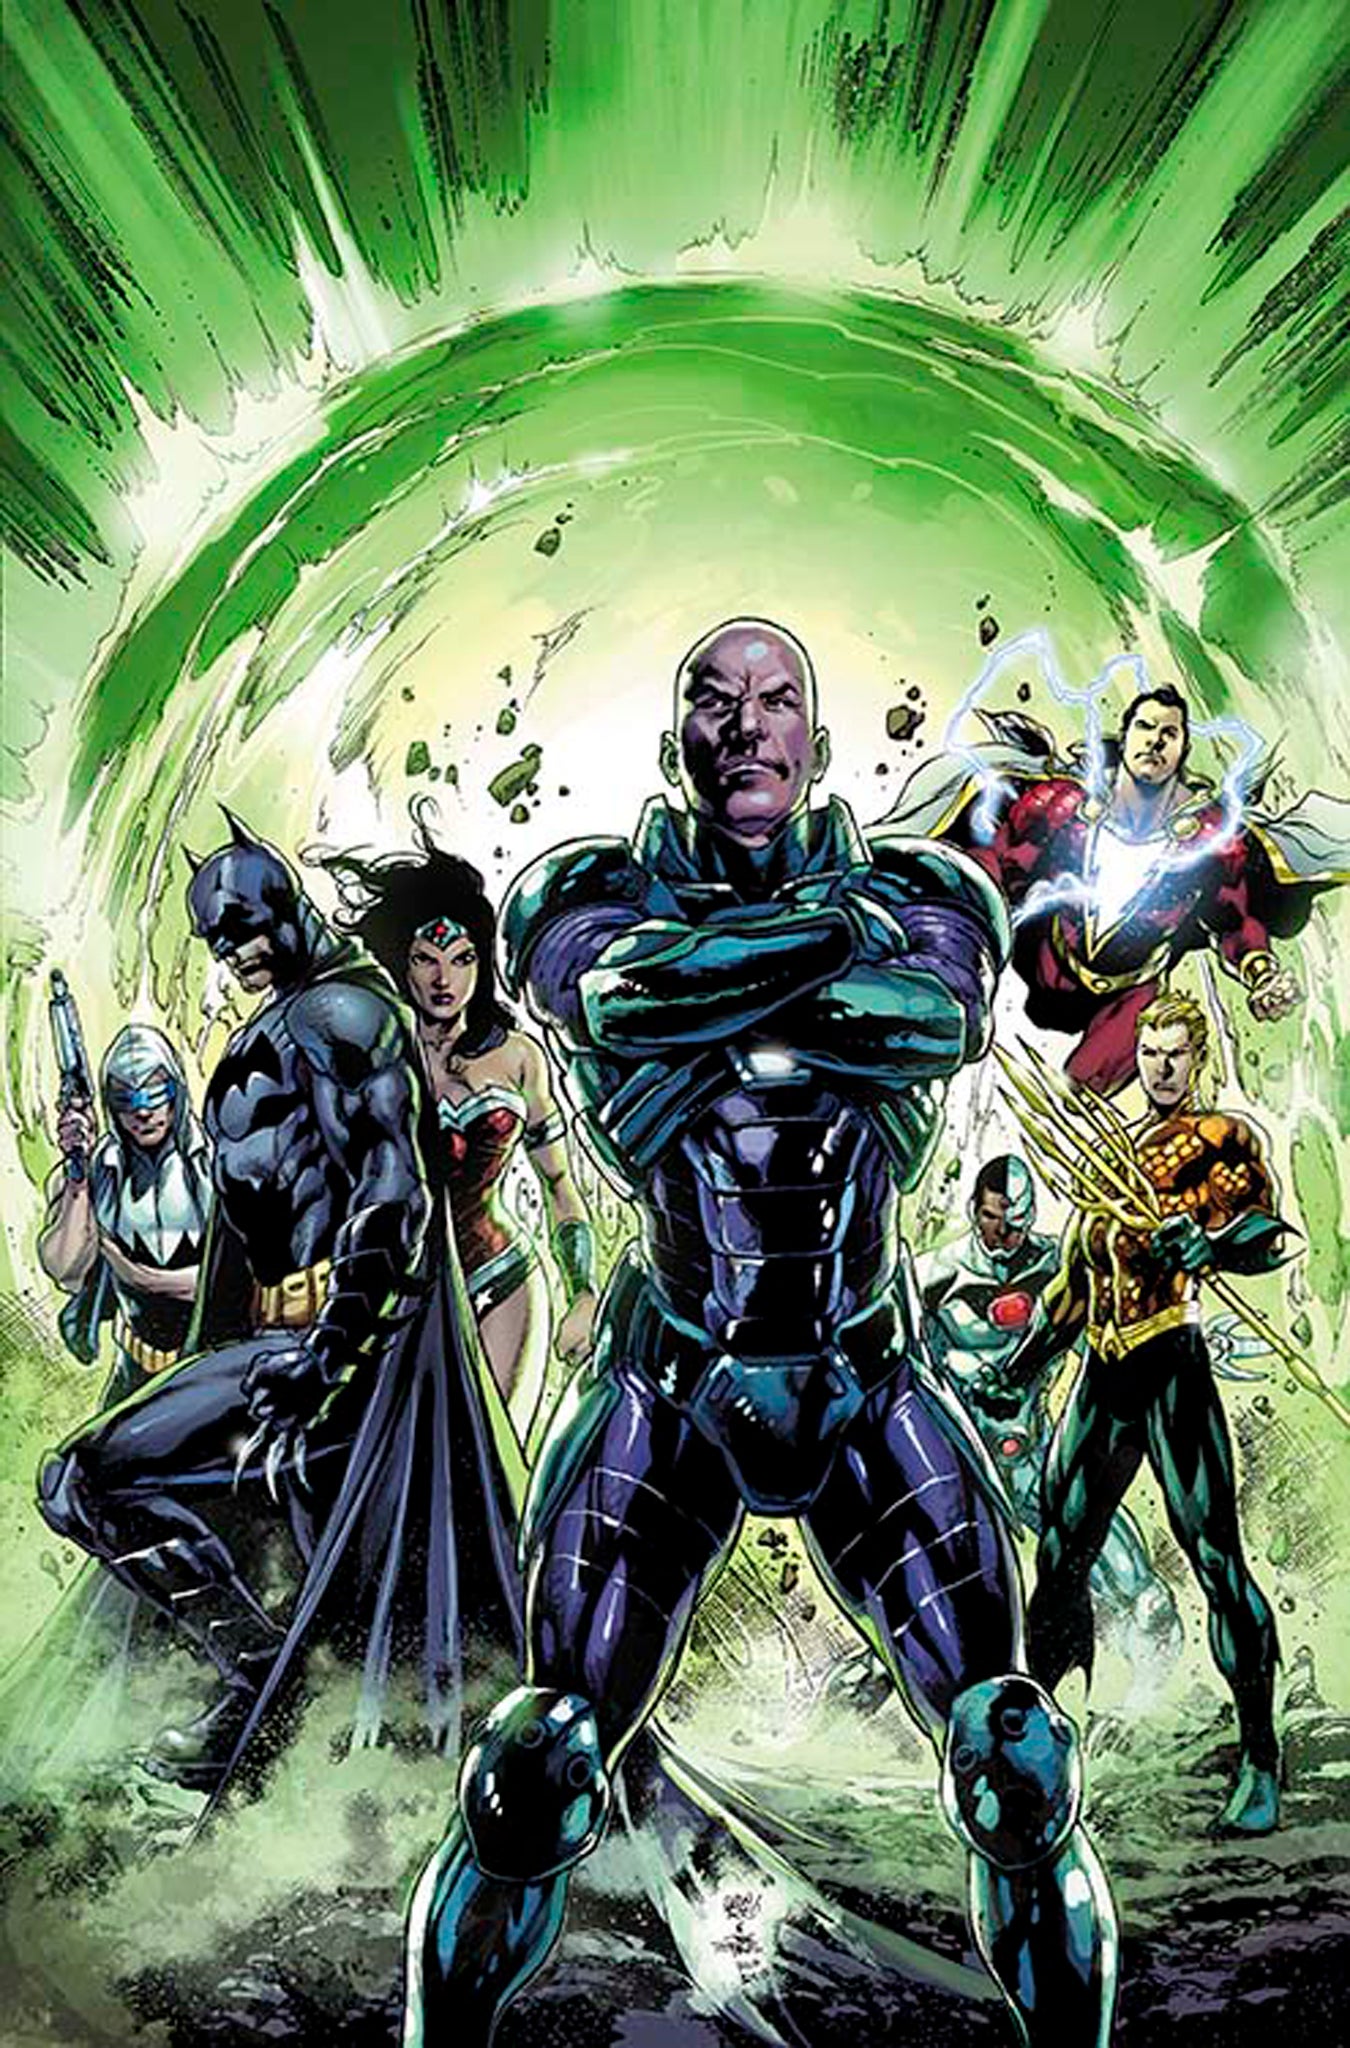 Lex Luthor's League: The cover art for 'Justice League'